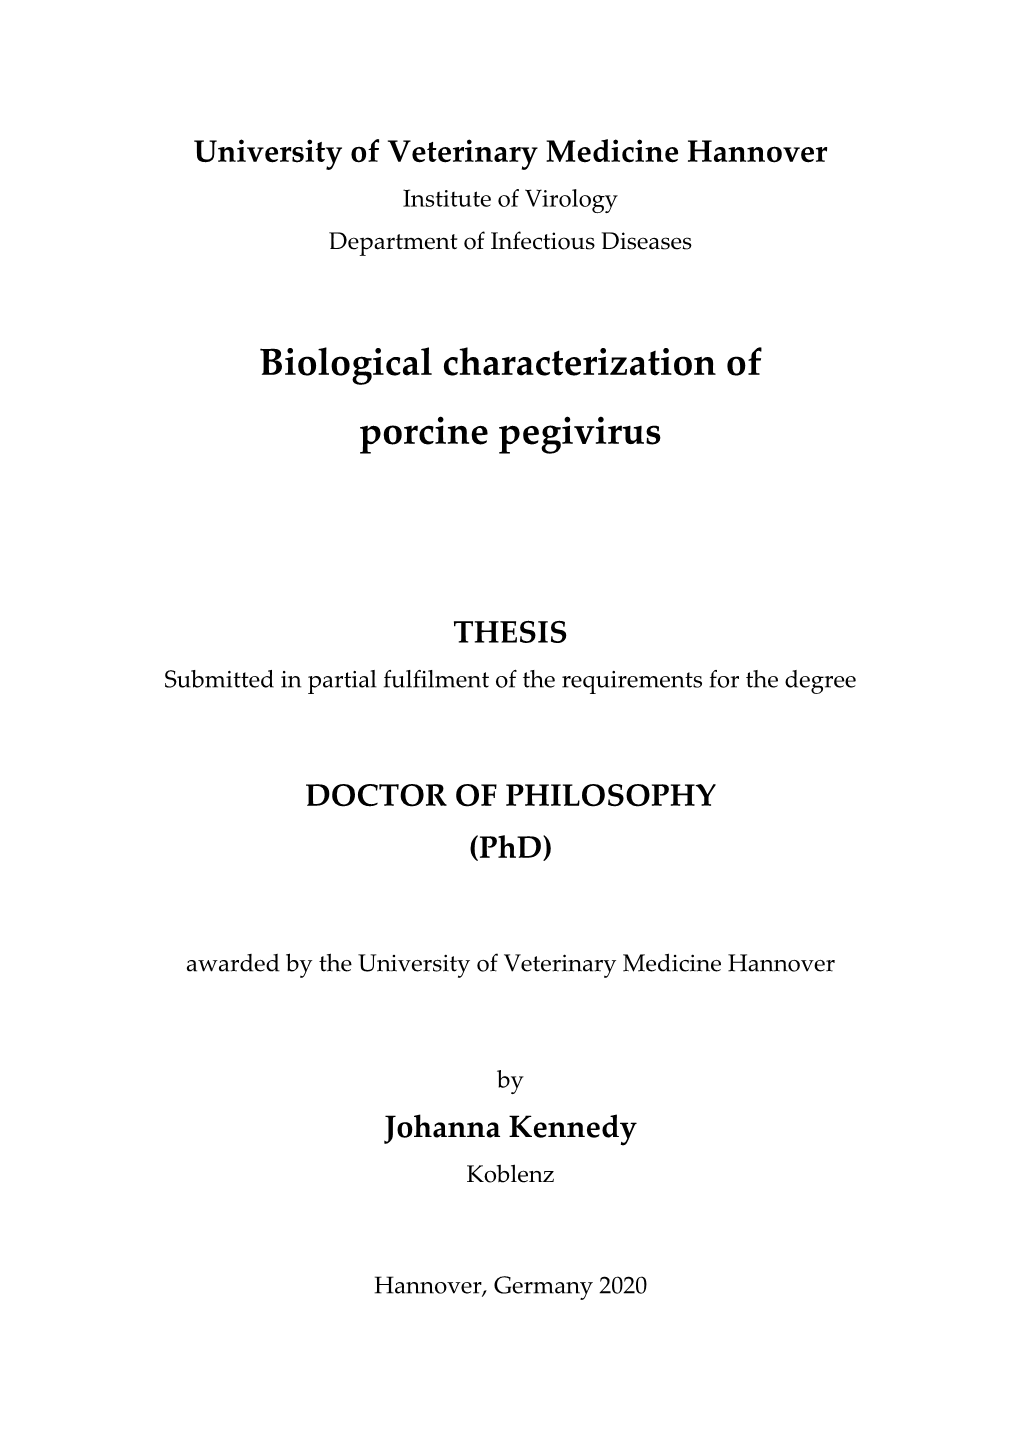 Biological Characterization of Porcine Pegivirus